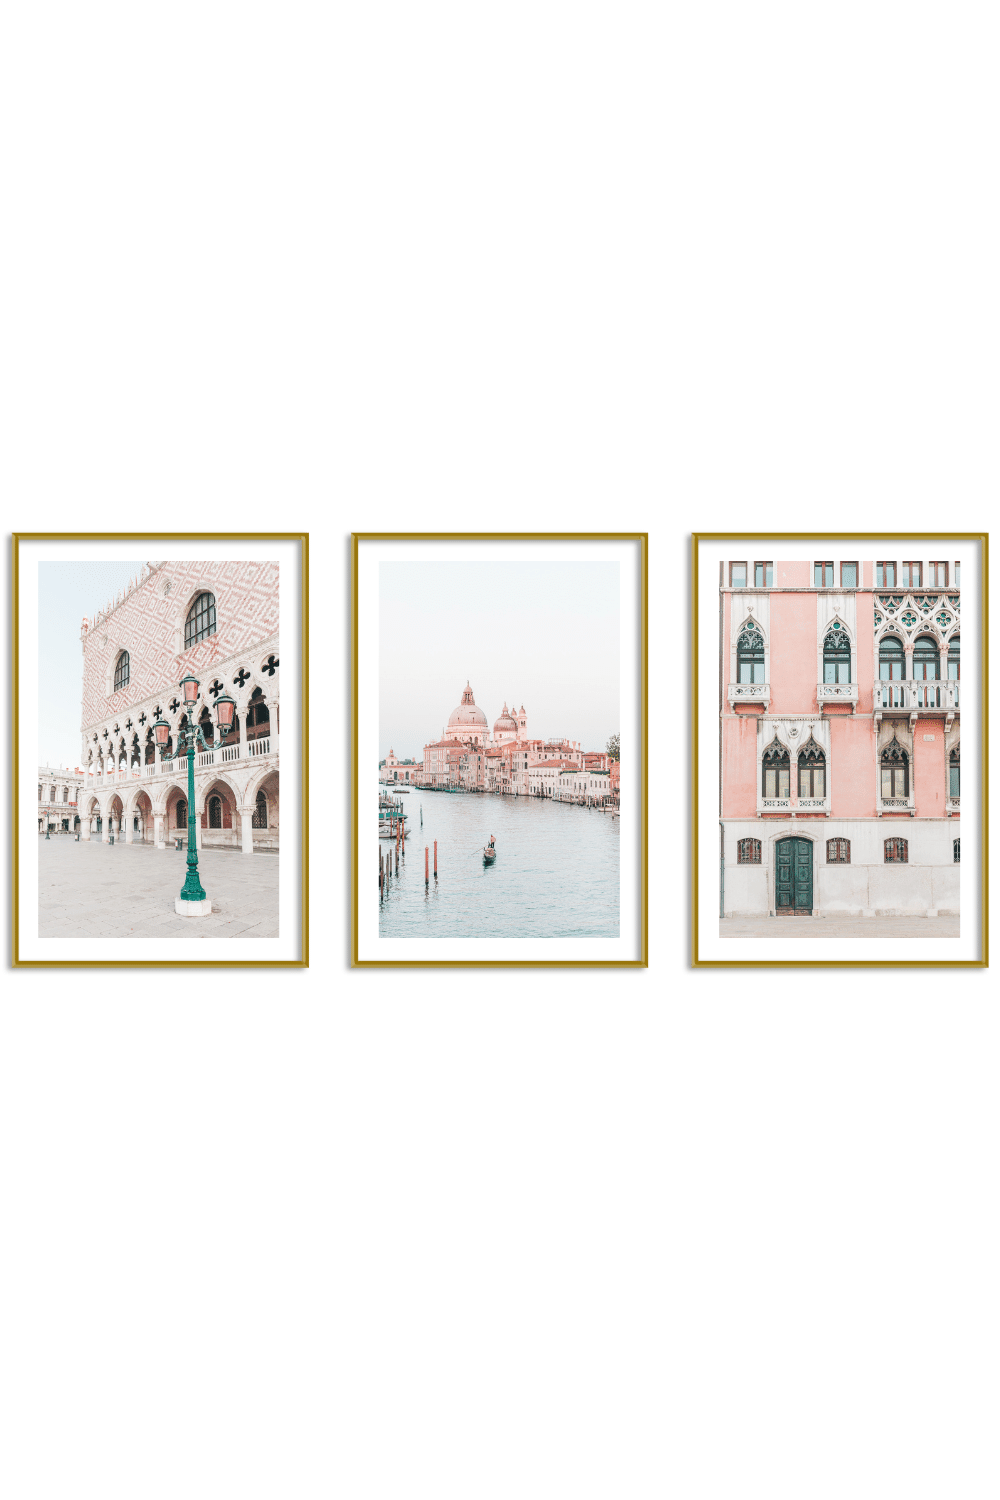 Gallery Wall Set of 3 - Art Print Set of 3 - Venice Pastel